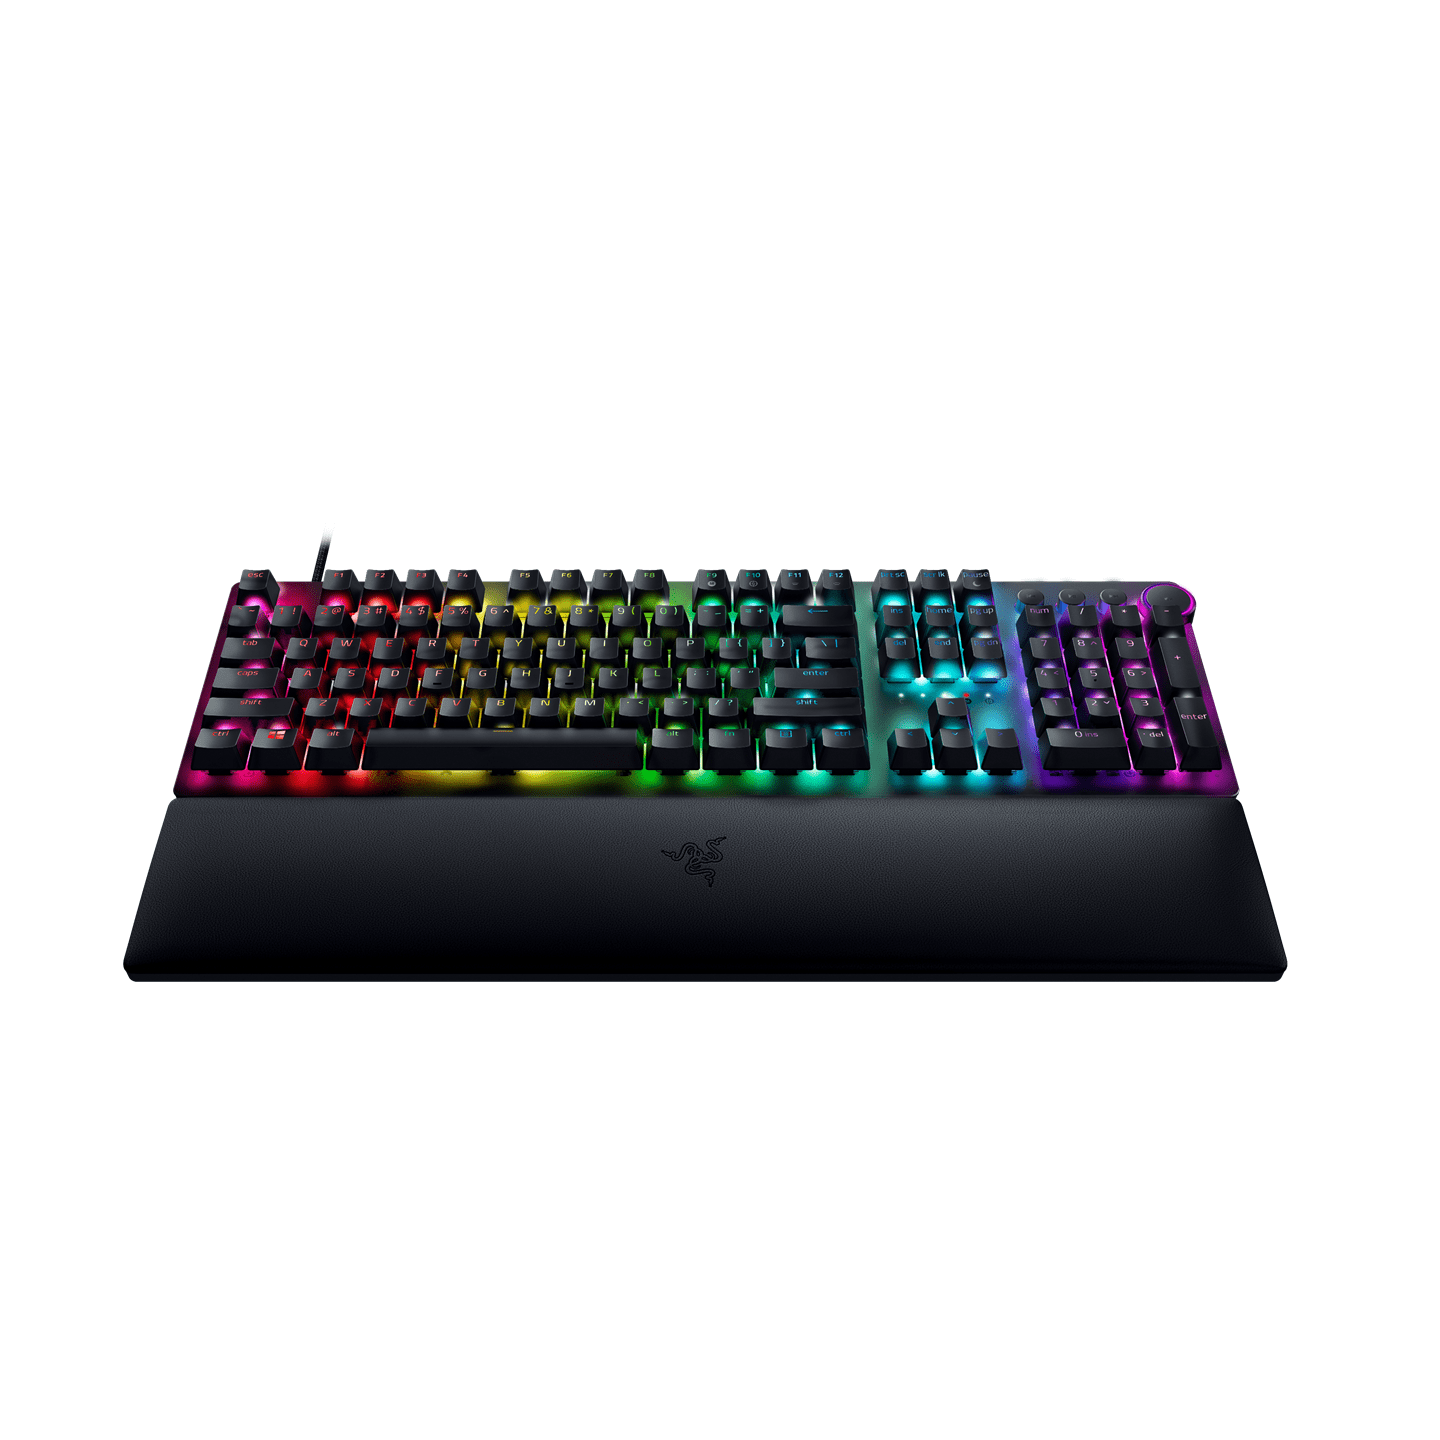 Razer Huntsman Wired Chroma Keyboard V2 for Clicky RGB, Black Gaming Optical PC, Wrist Rest, Switch